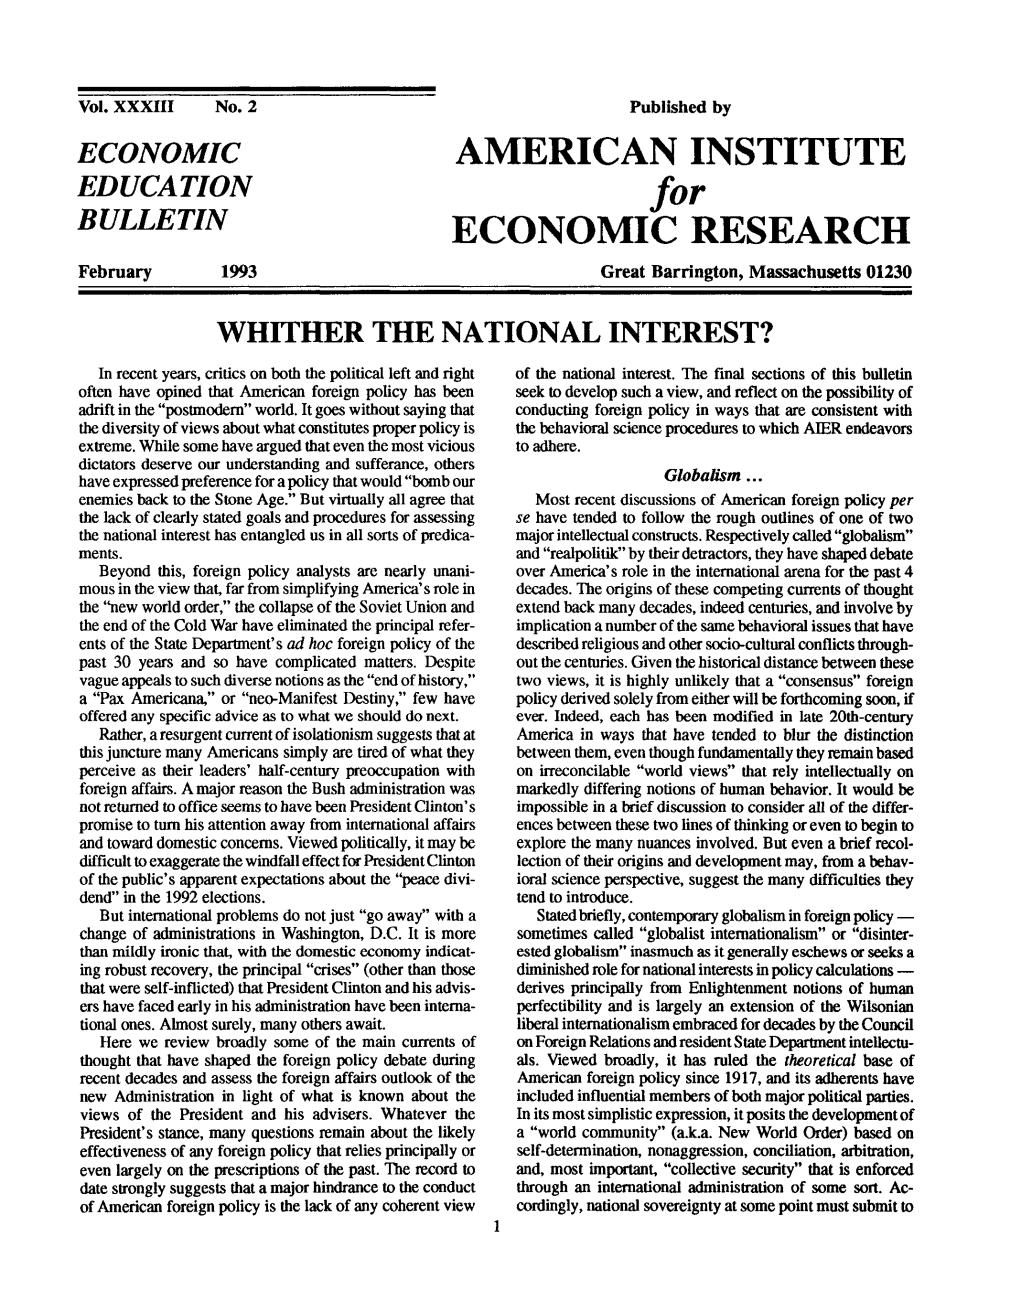 American Institute Economic Research